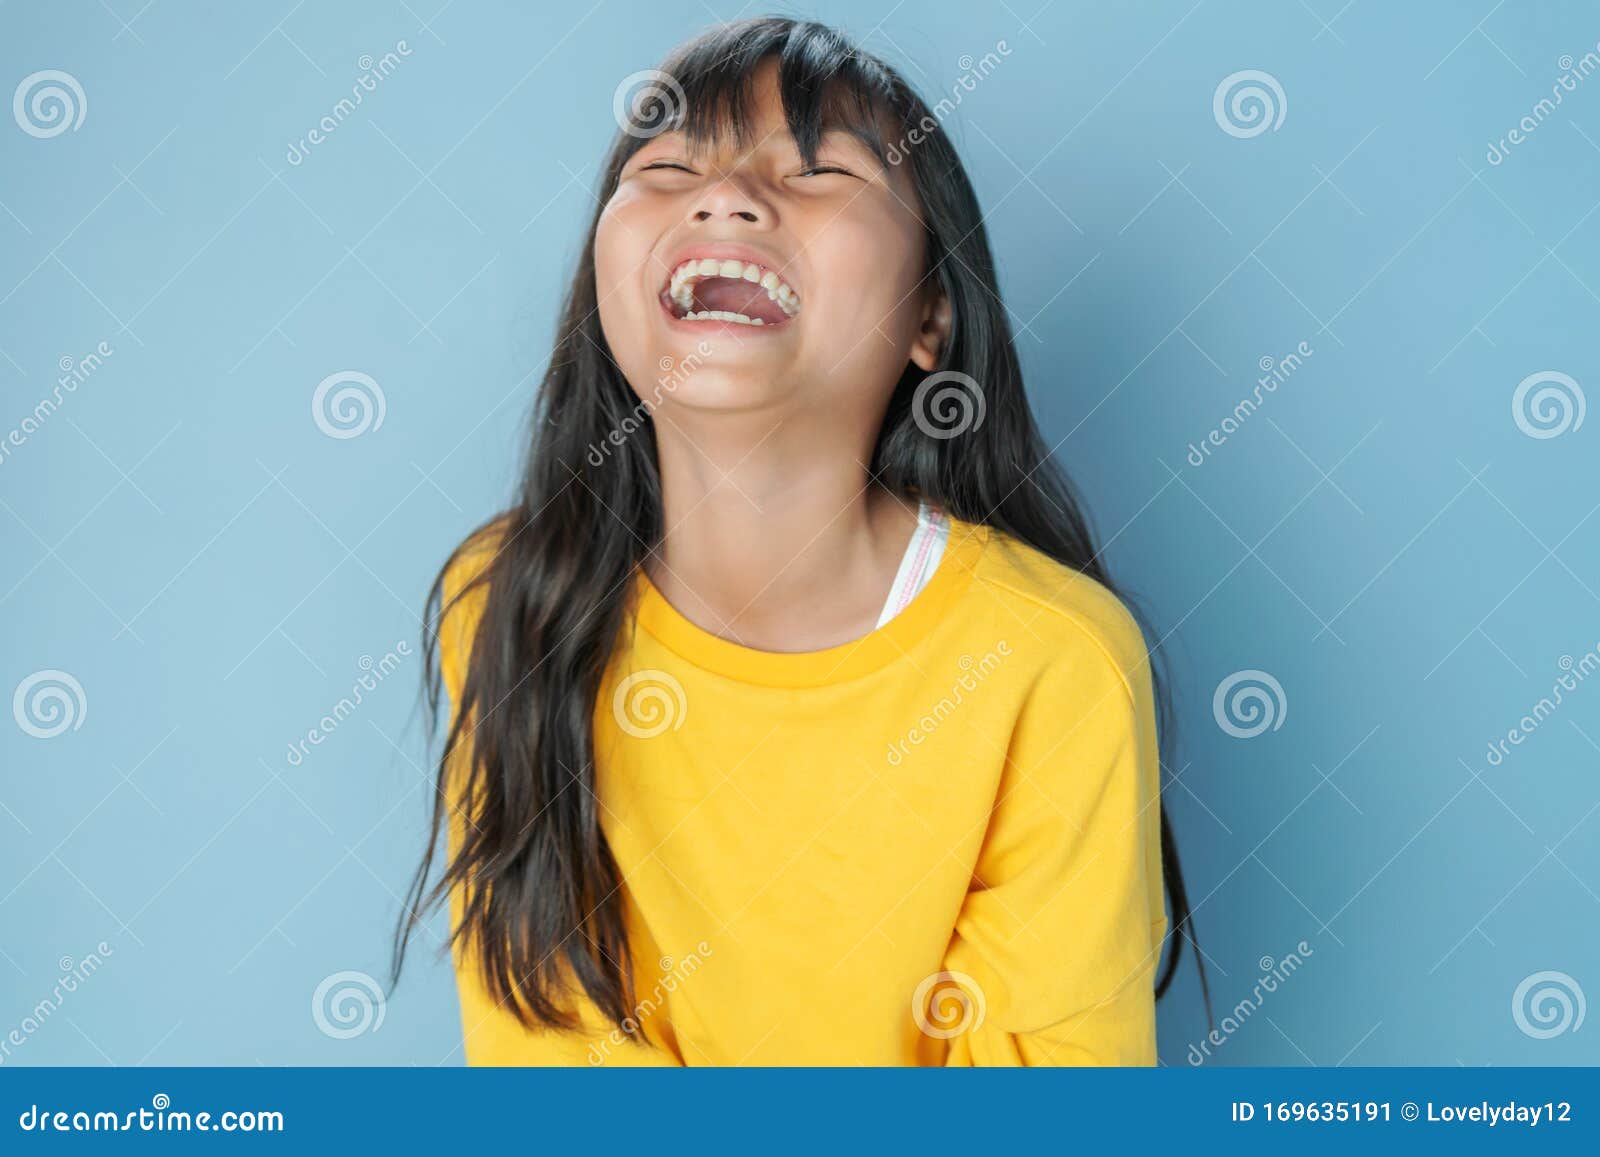 cute little girl laugh happy on blue